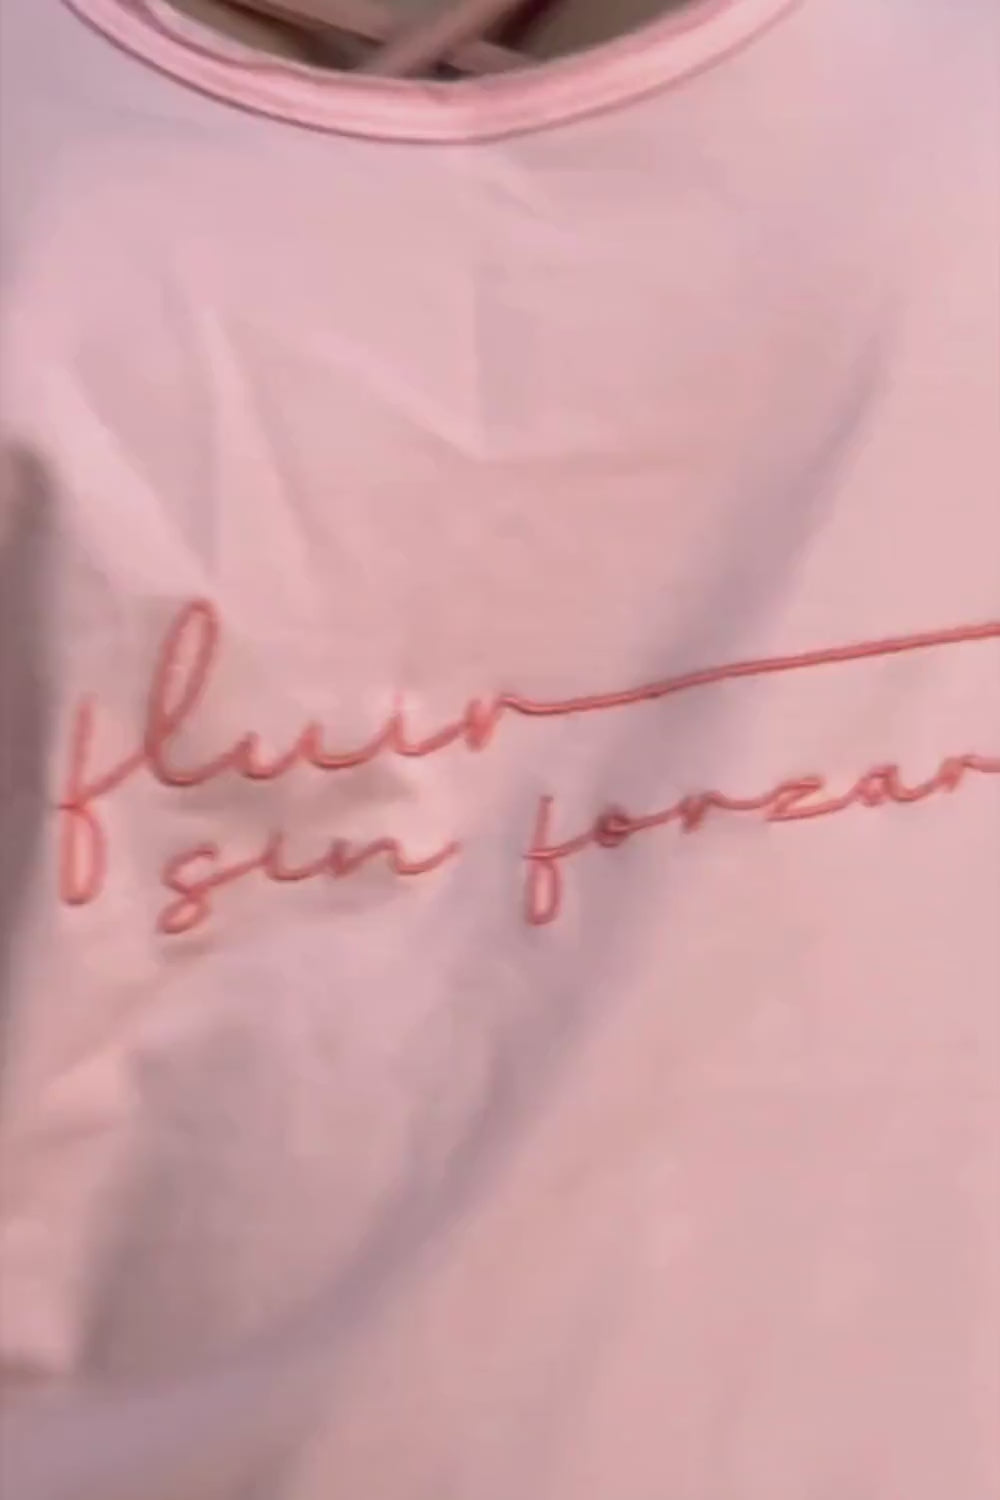 Camiseta Fluir Tank, modelo estilo nadadora en color rosa Rose Shadow Yogimi. Camiseta tirantes holgada con mantra &quot;Fluir sin forzar&quot;.